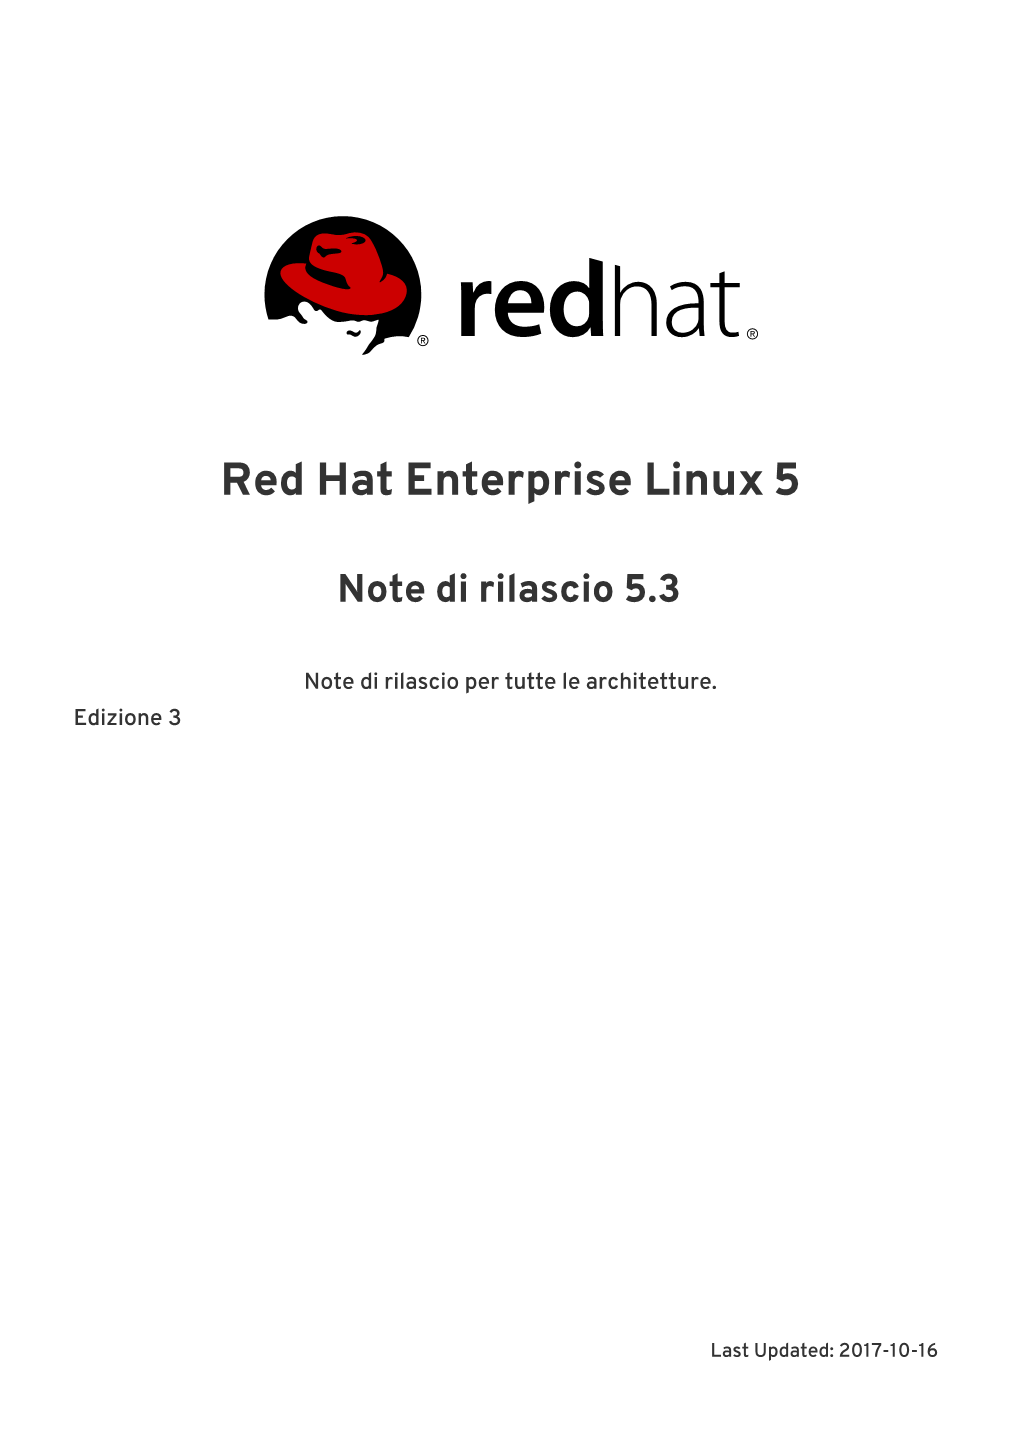 Red Hat Enterprise Linux 5 Note Di Rilascio 5.3